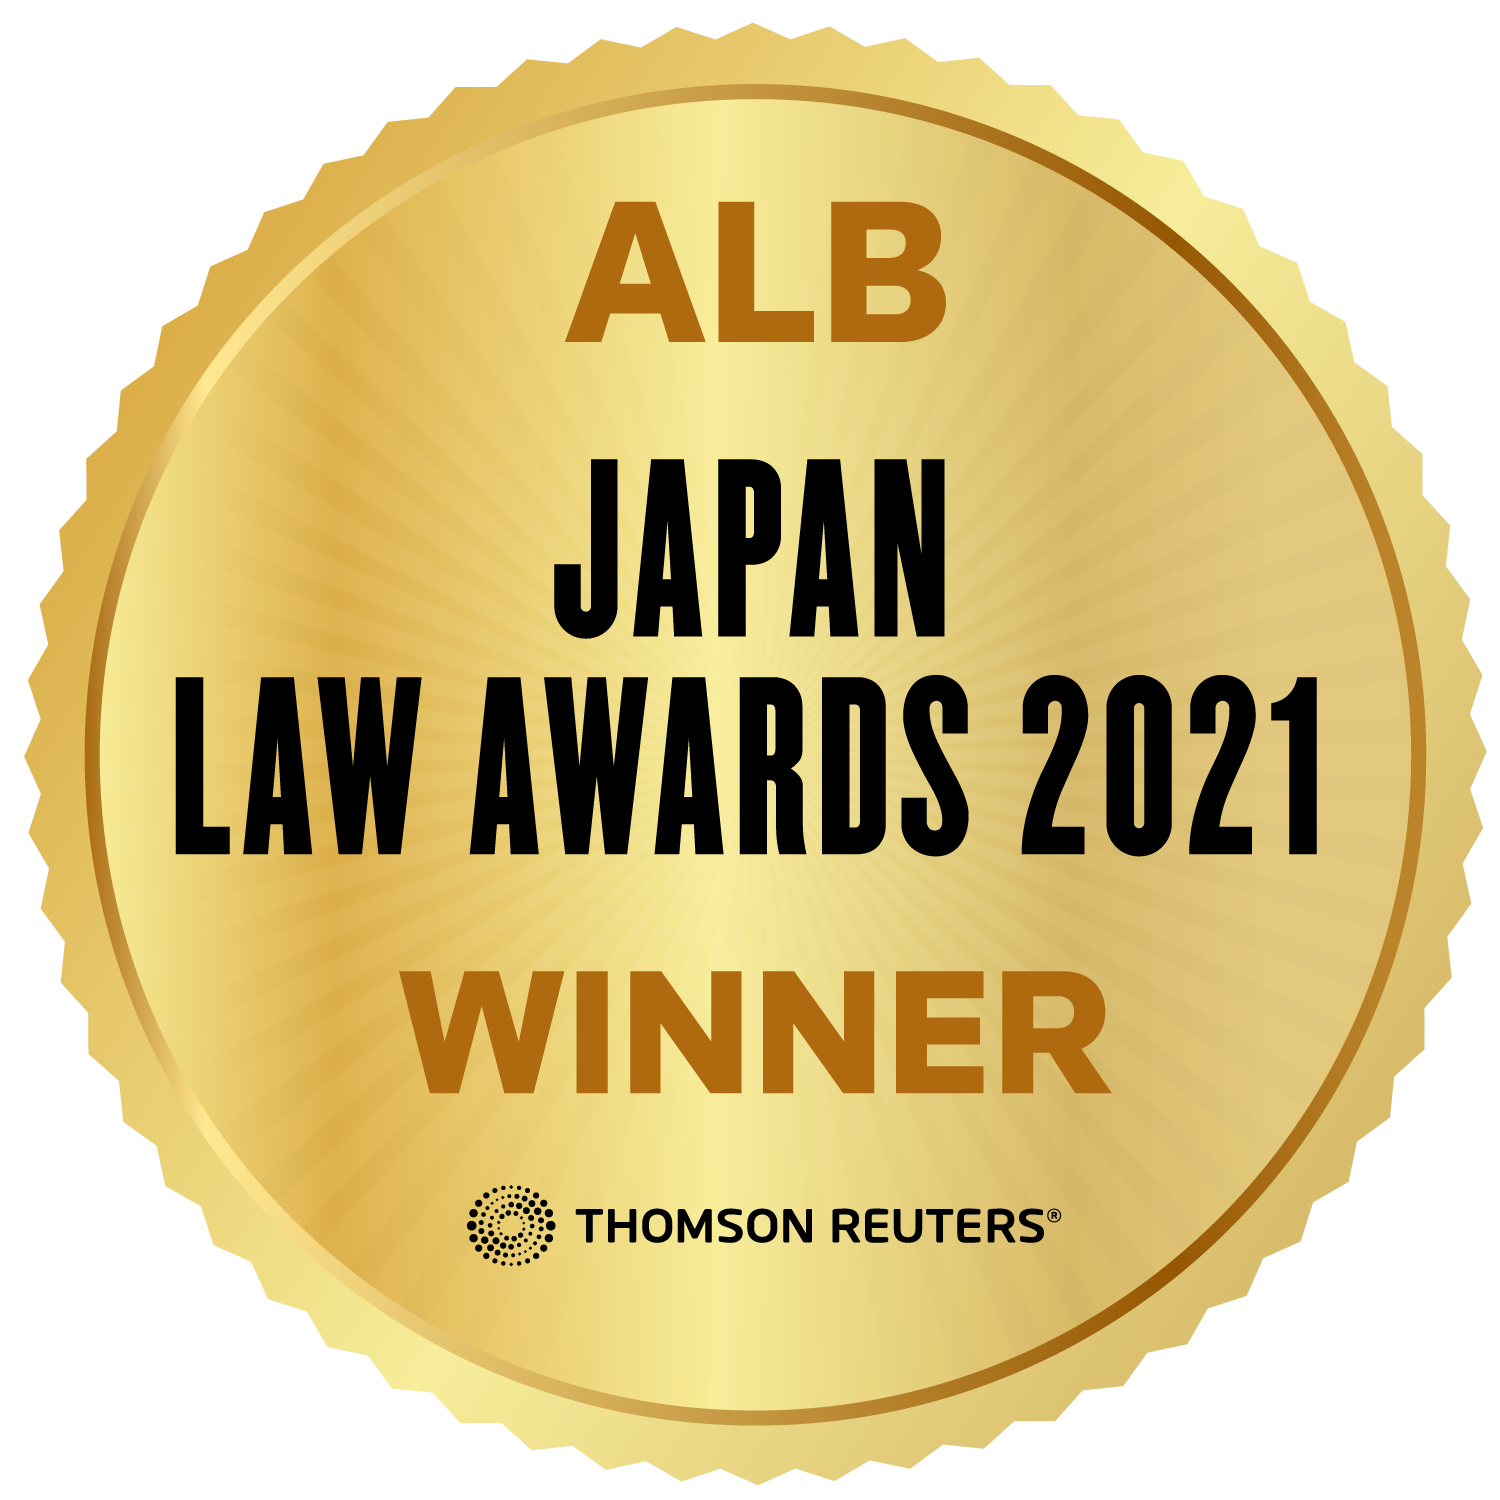 ASIAN LEGAL BUSINESS JAPAN LAW AWARDS 2021 WINNER